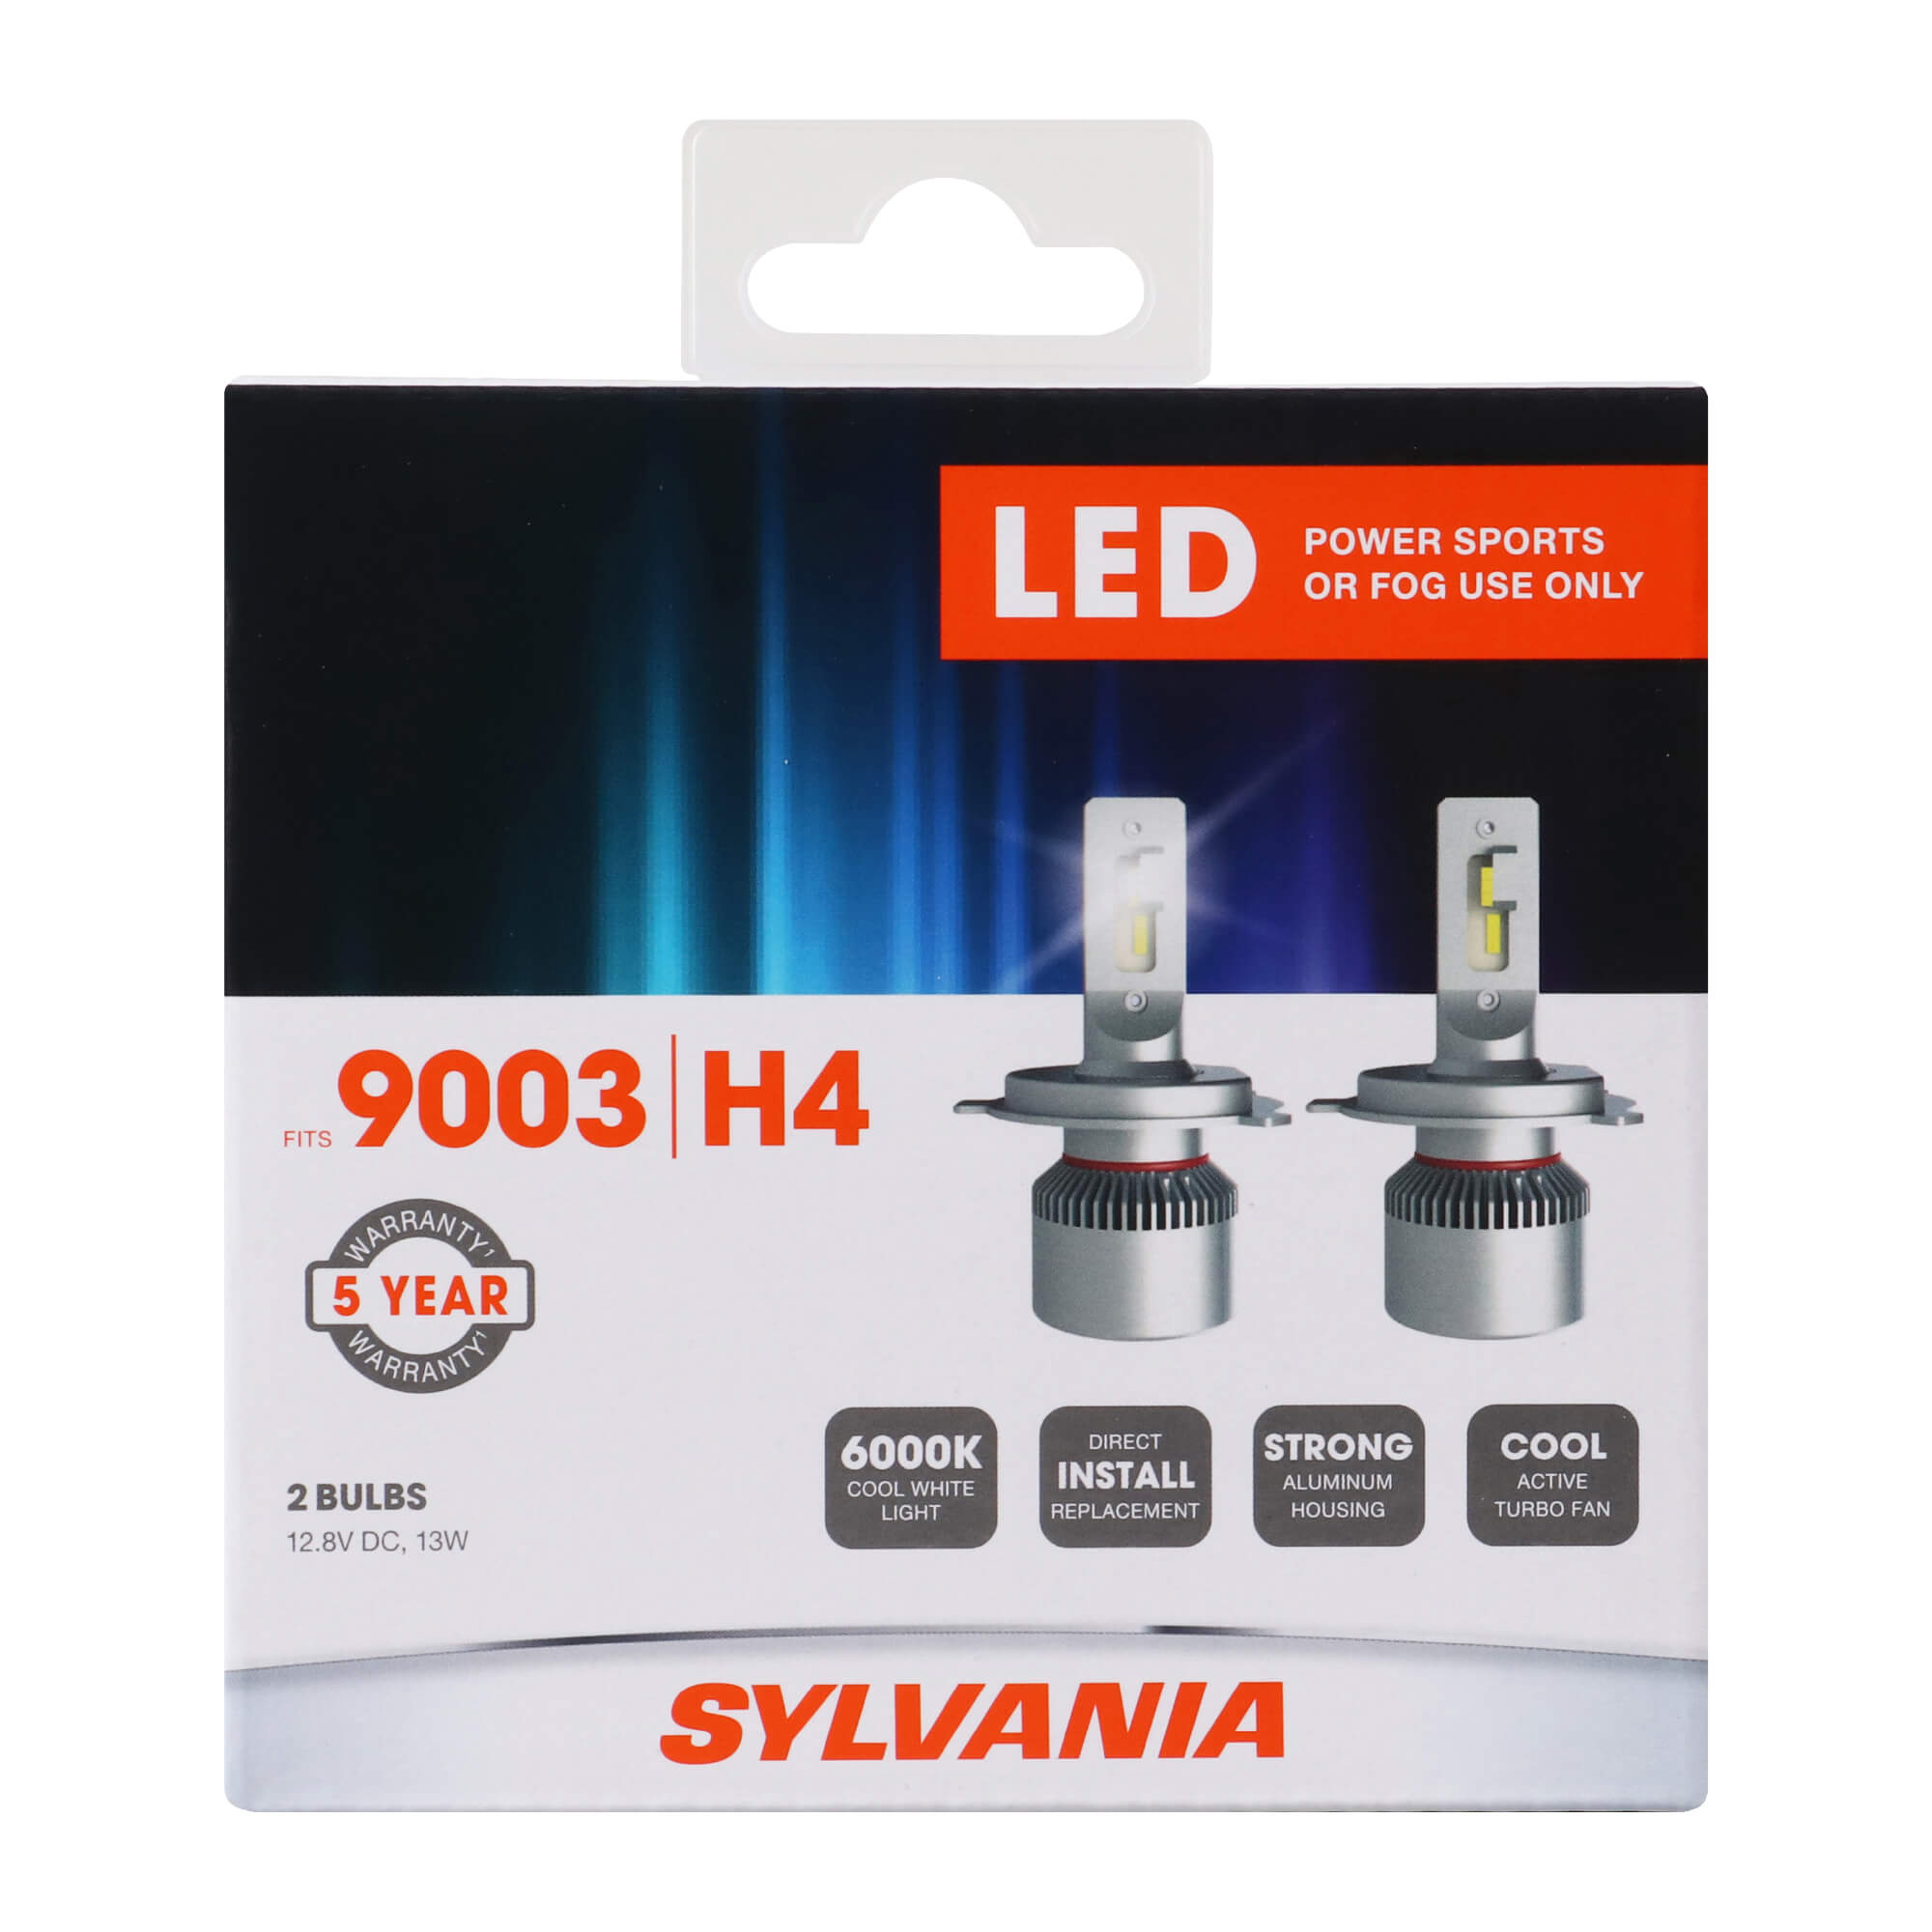 9003 - H4 - HB2 Bi LED Bulb Ventilated